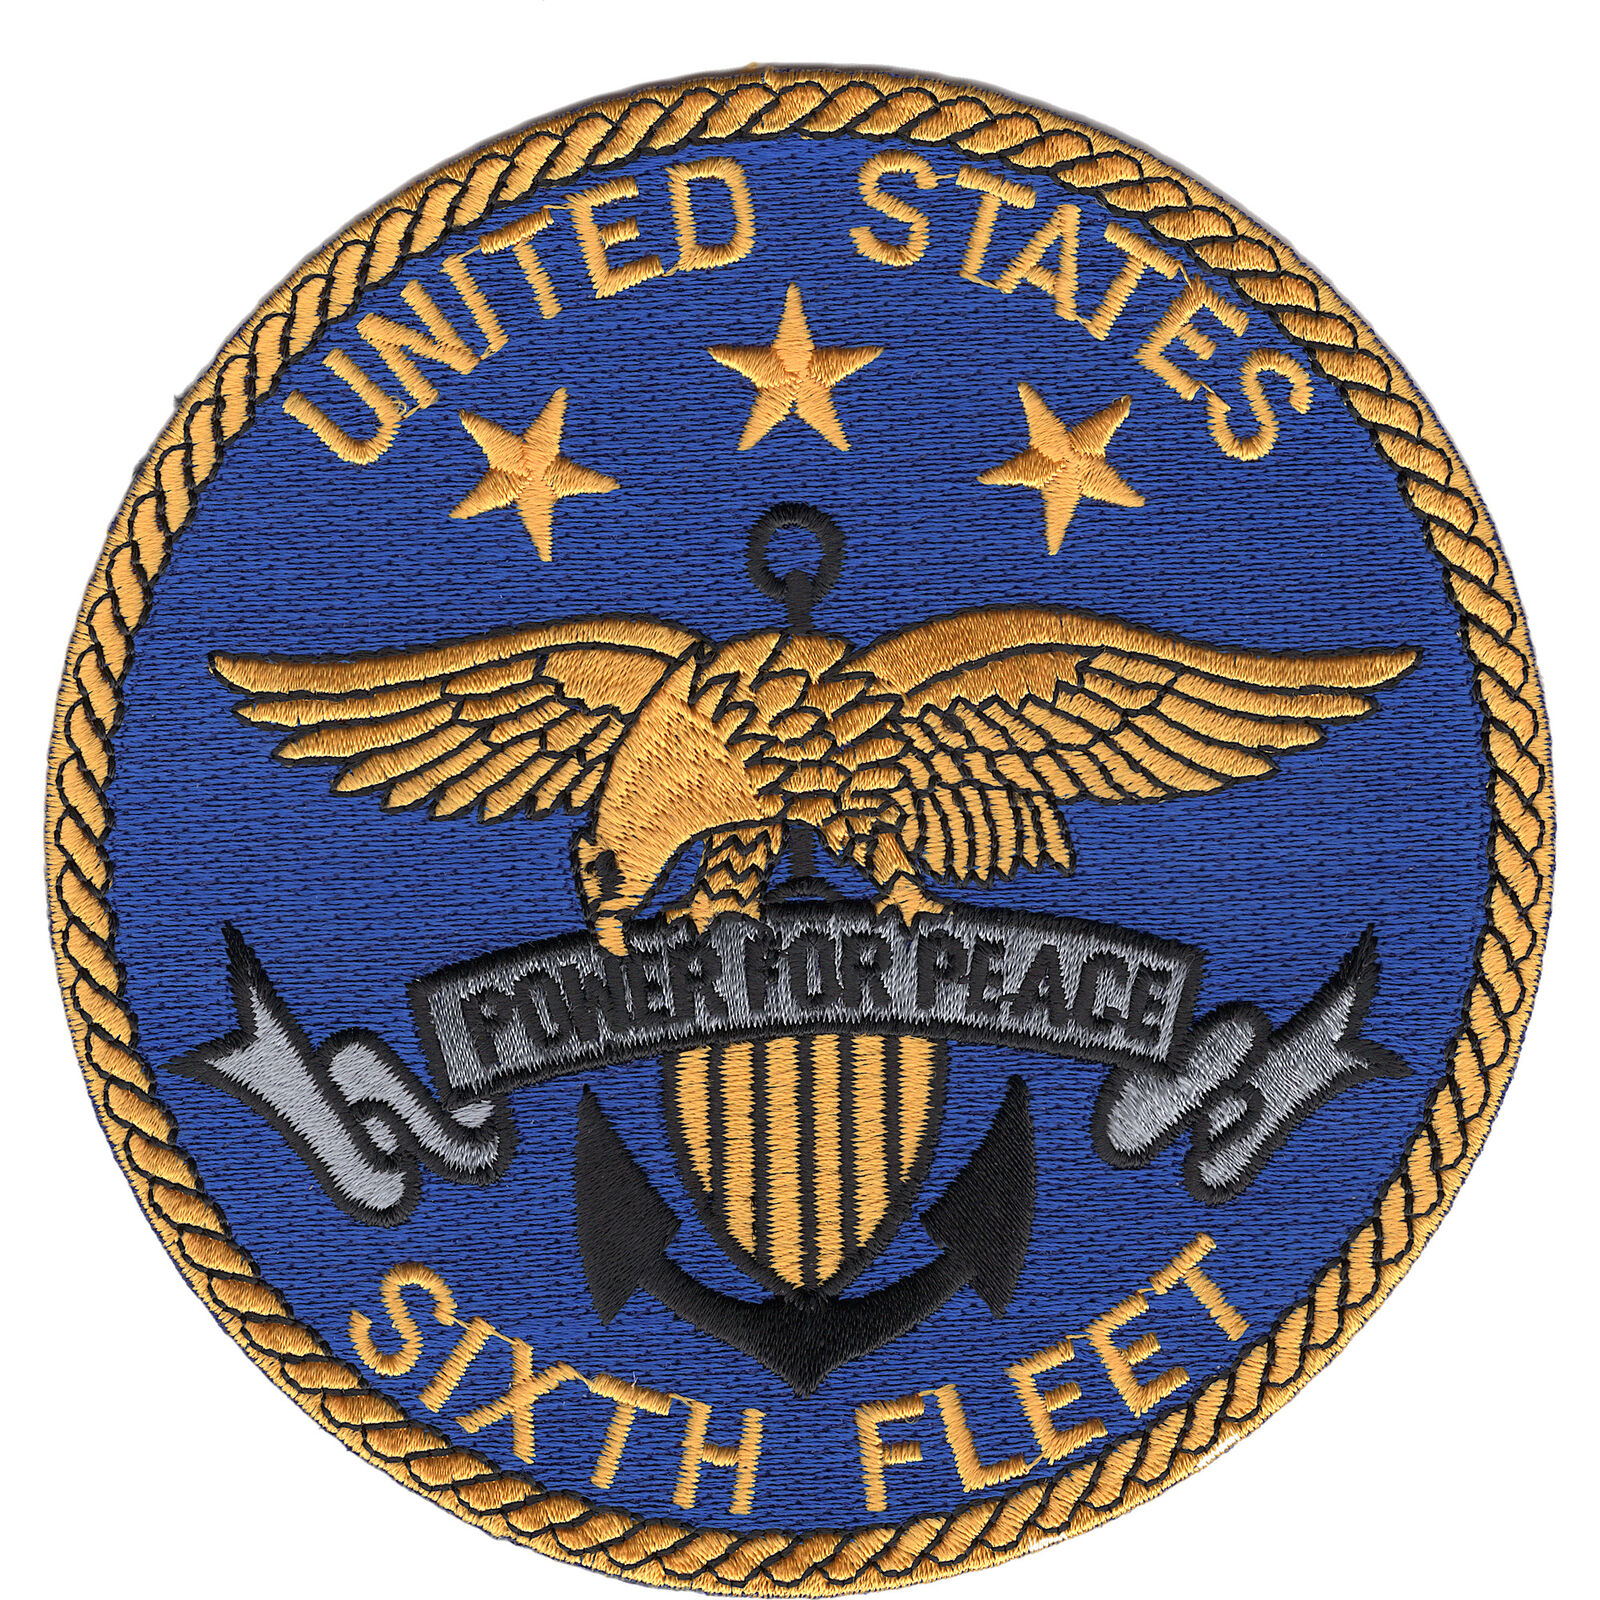 United States Sixth Fleet Patch